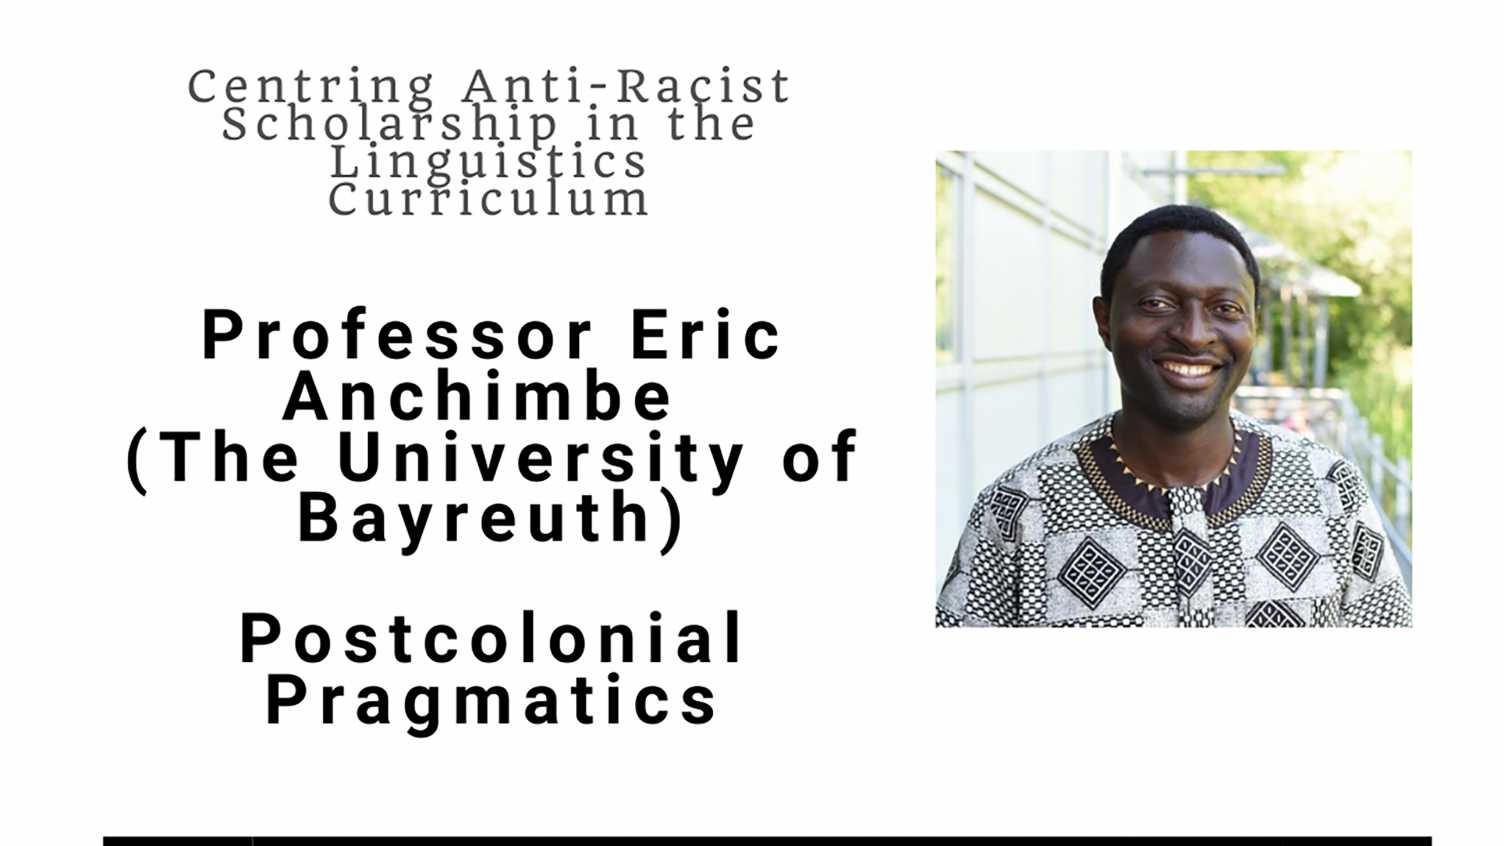 Thumbnail for Online workshop: Professor Eric Anchimbe on Postcolonial Pragmatics - “Centrin…